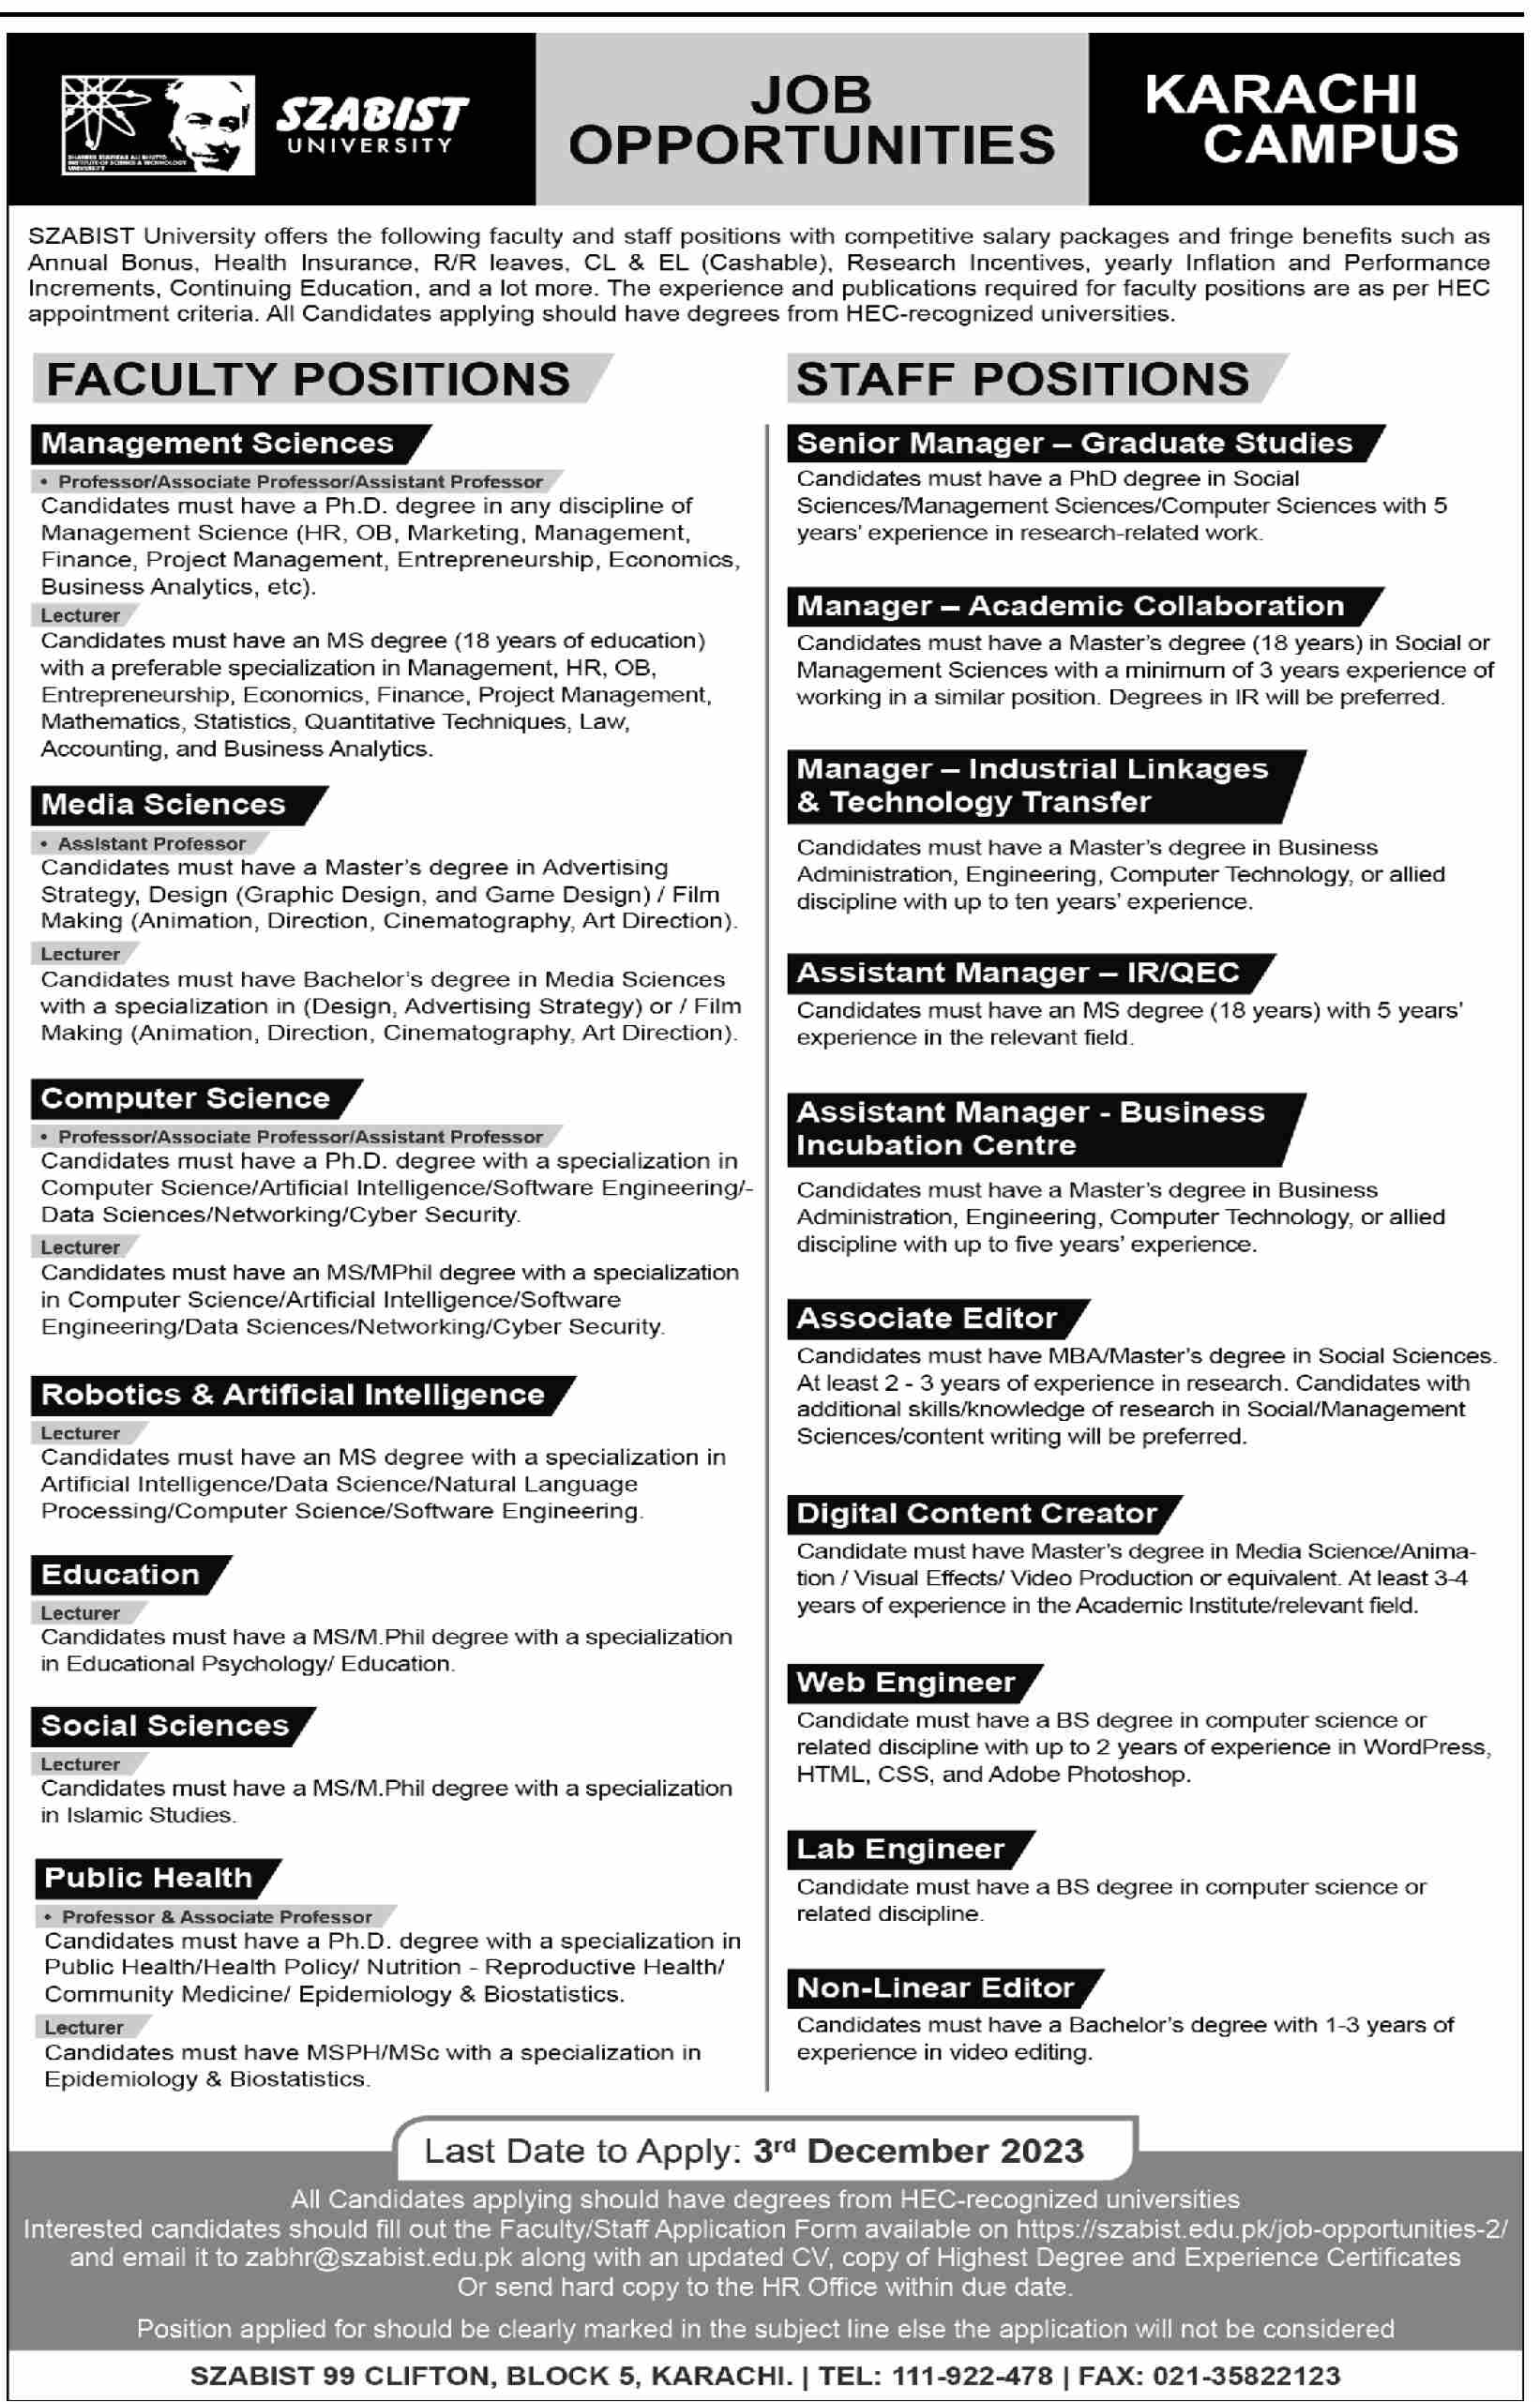 SZABIST University Karachi Campus Faculty & Staff Positions Jobs